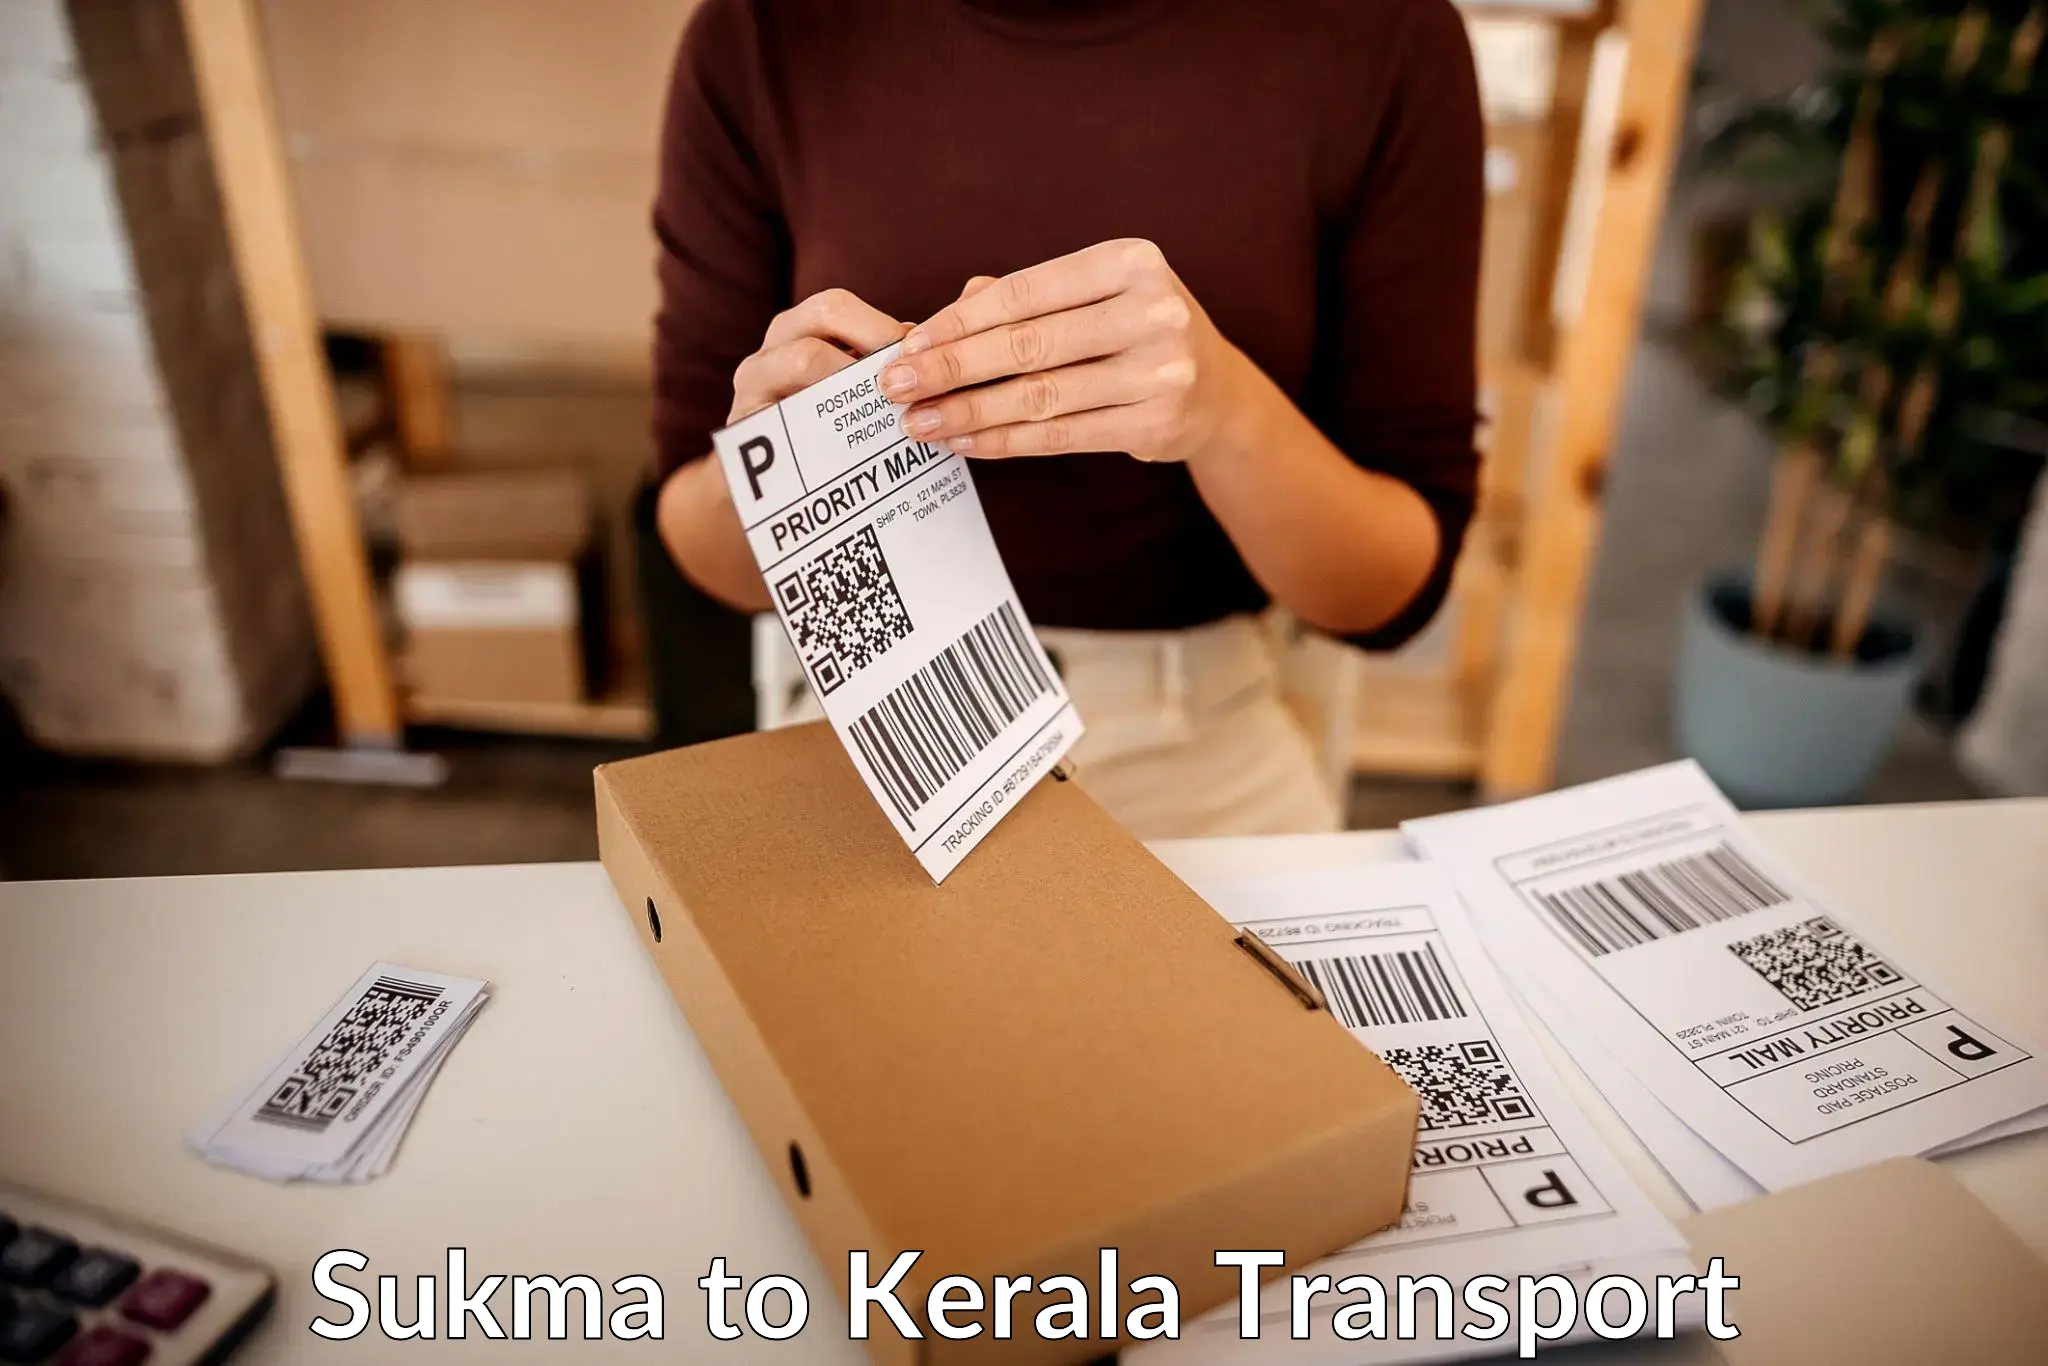 Transport in sharing Sukma to Palakkad